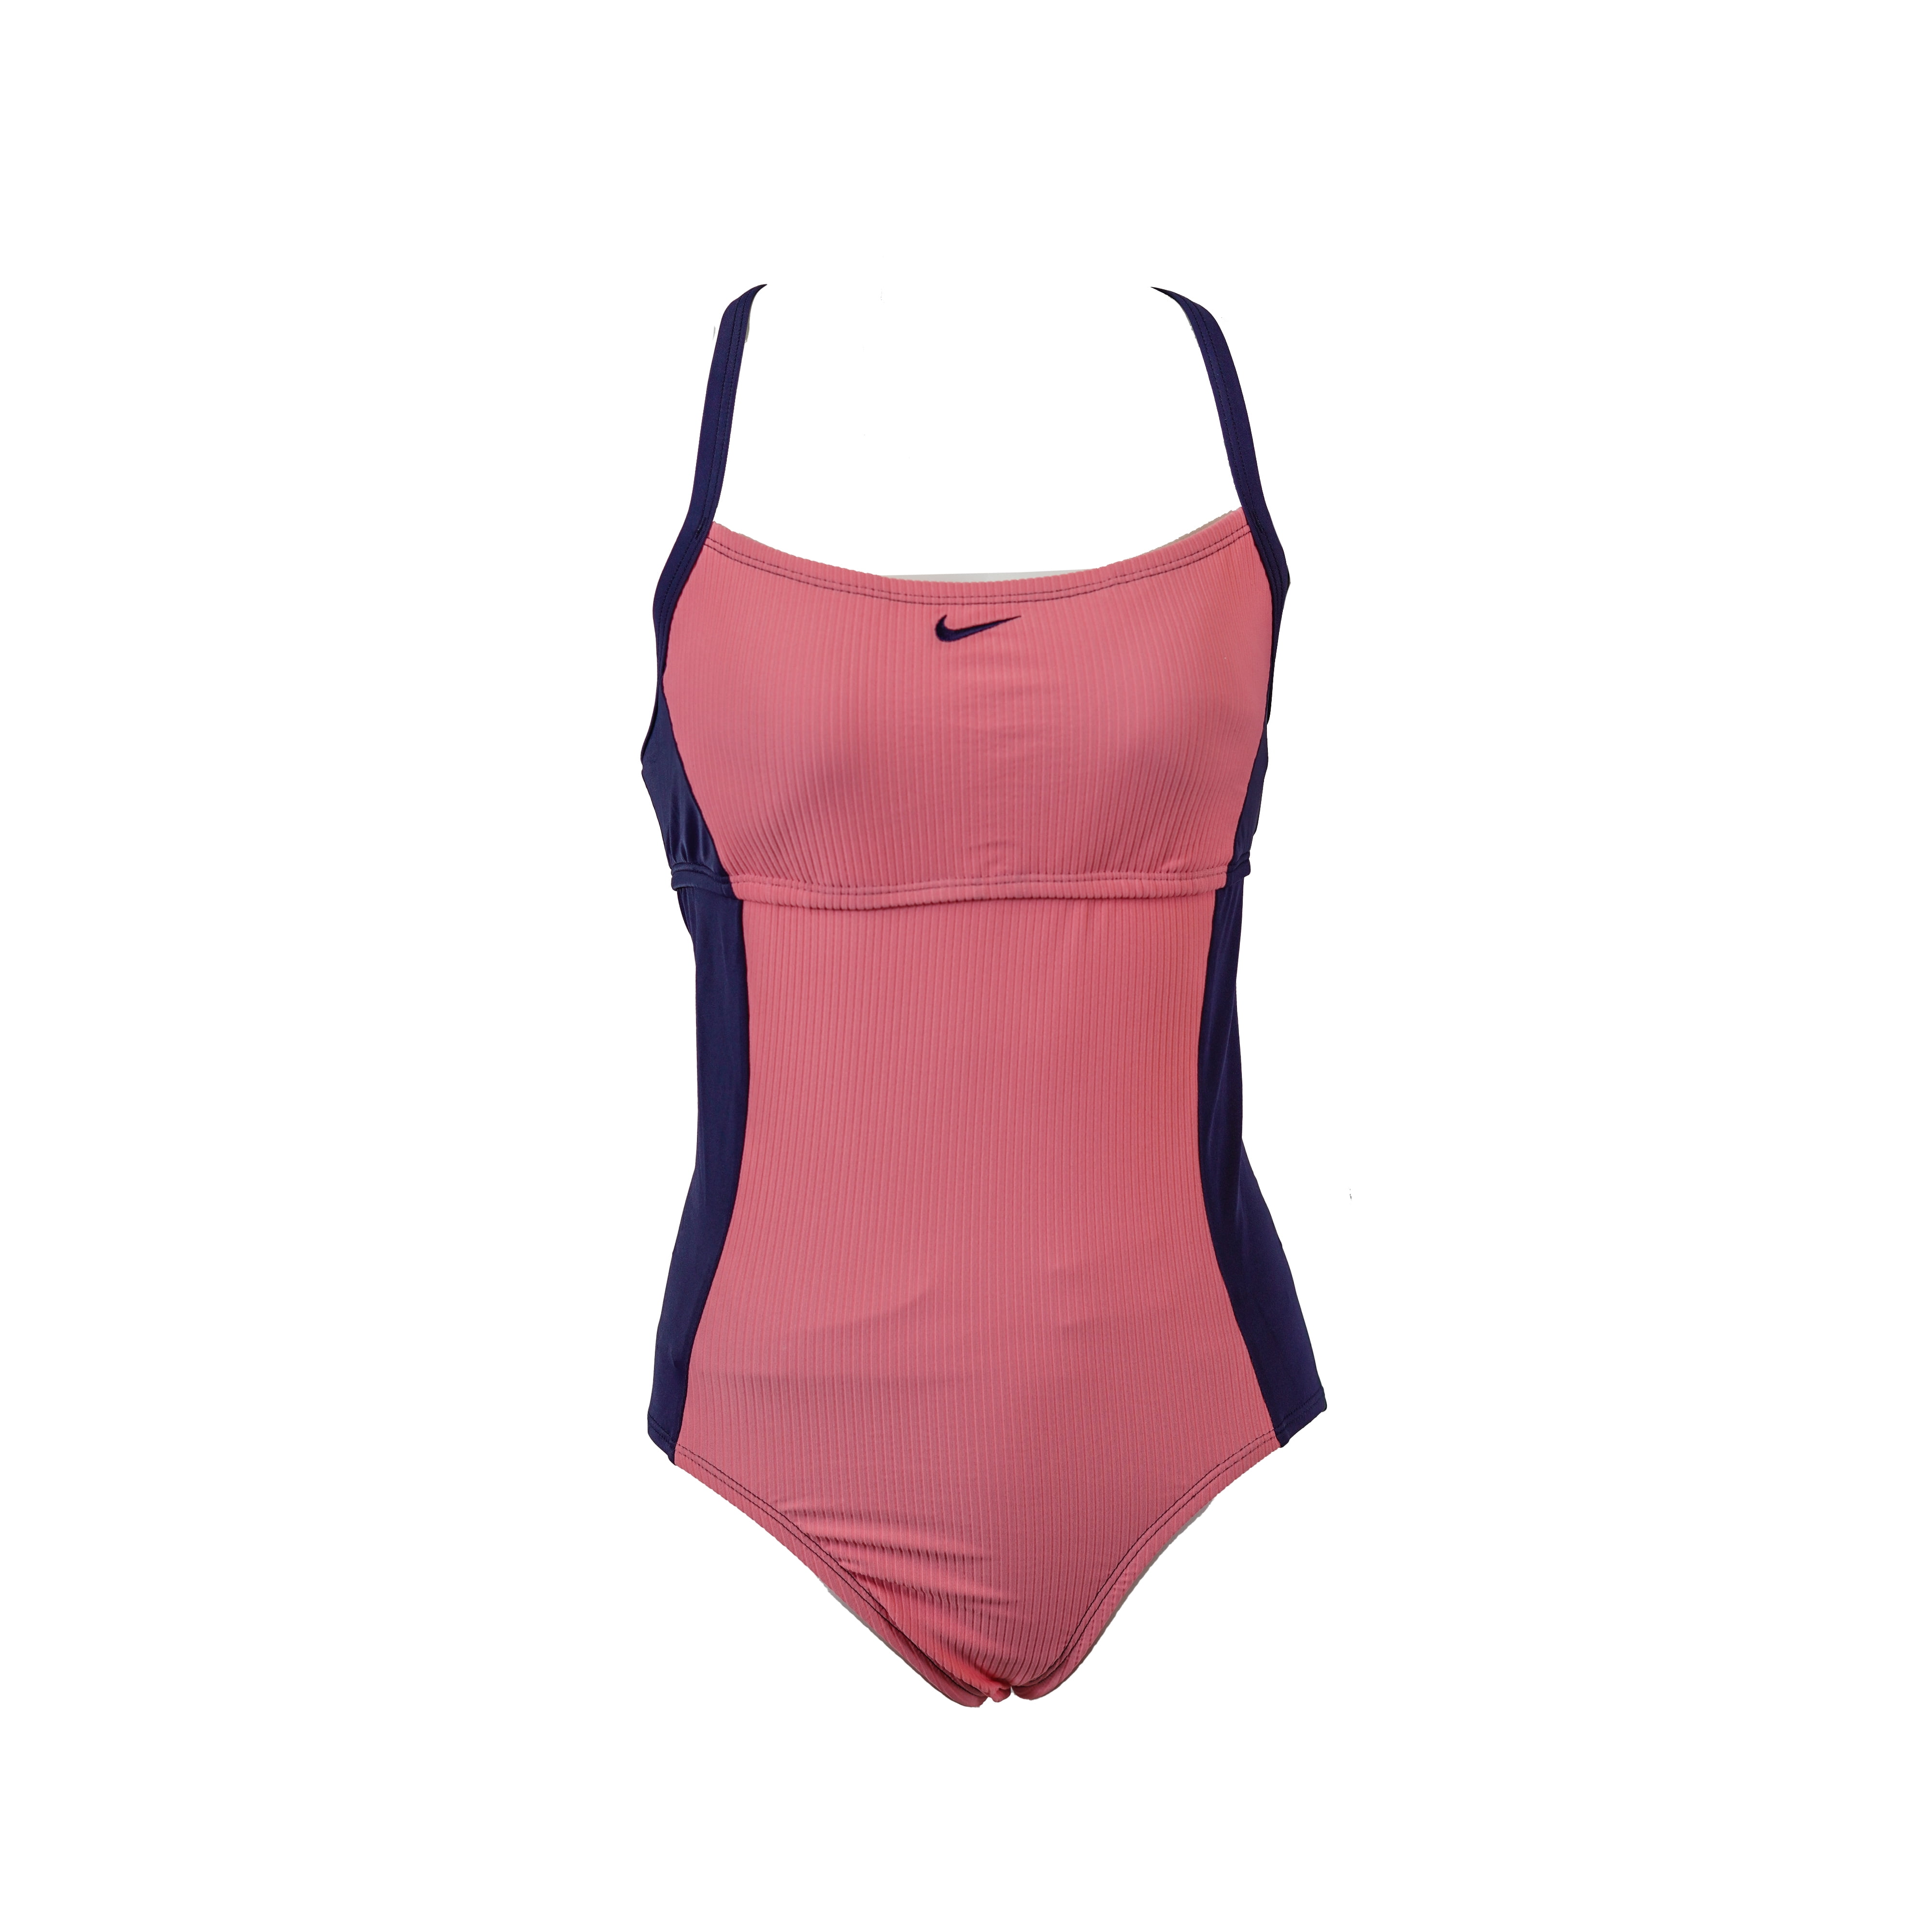 Nike Women's One Piece Swimsuit Navy Blue Pink (M)